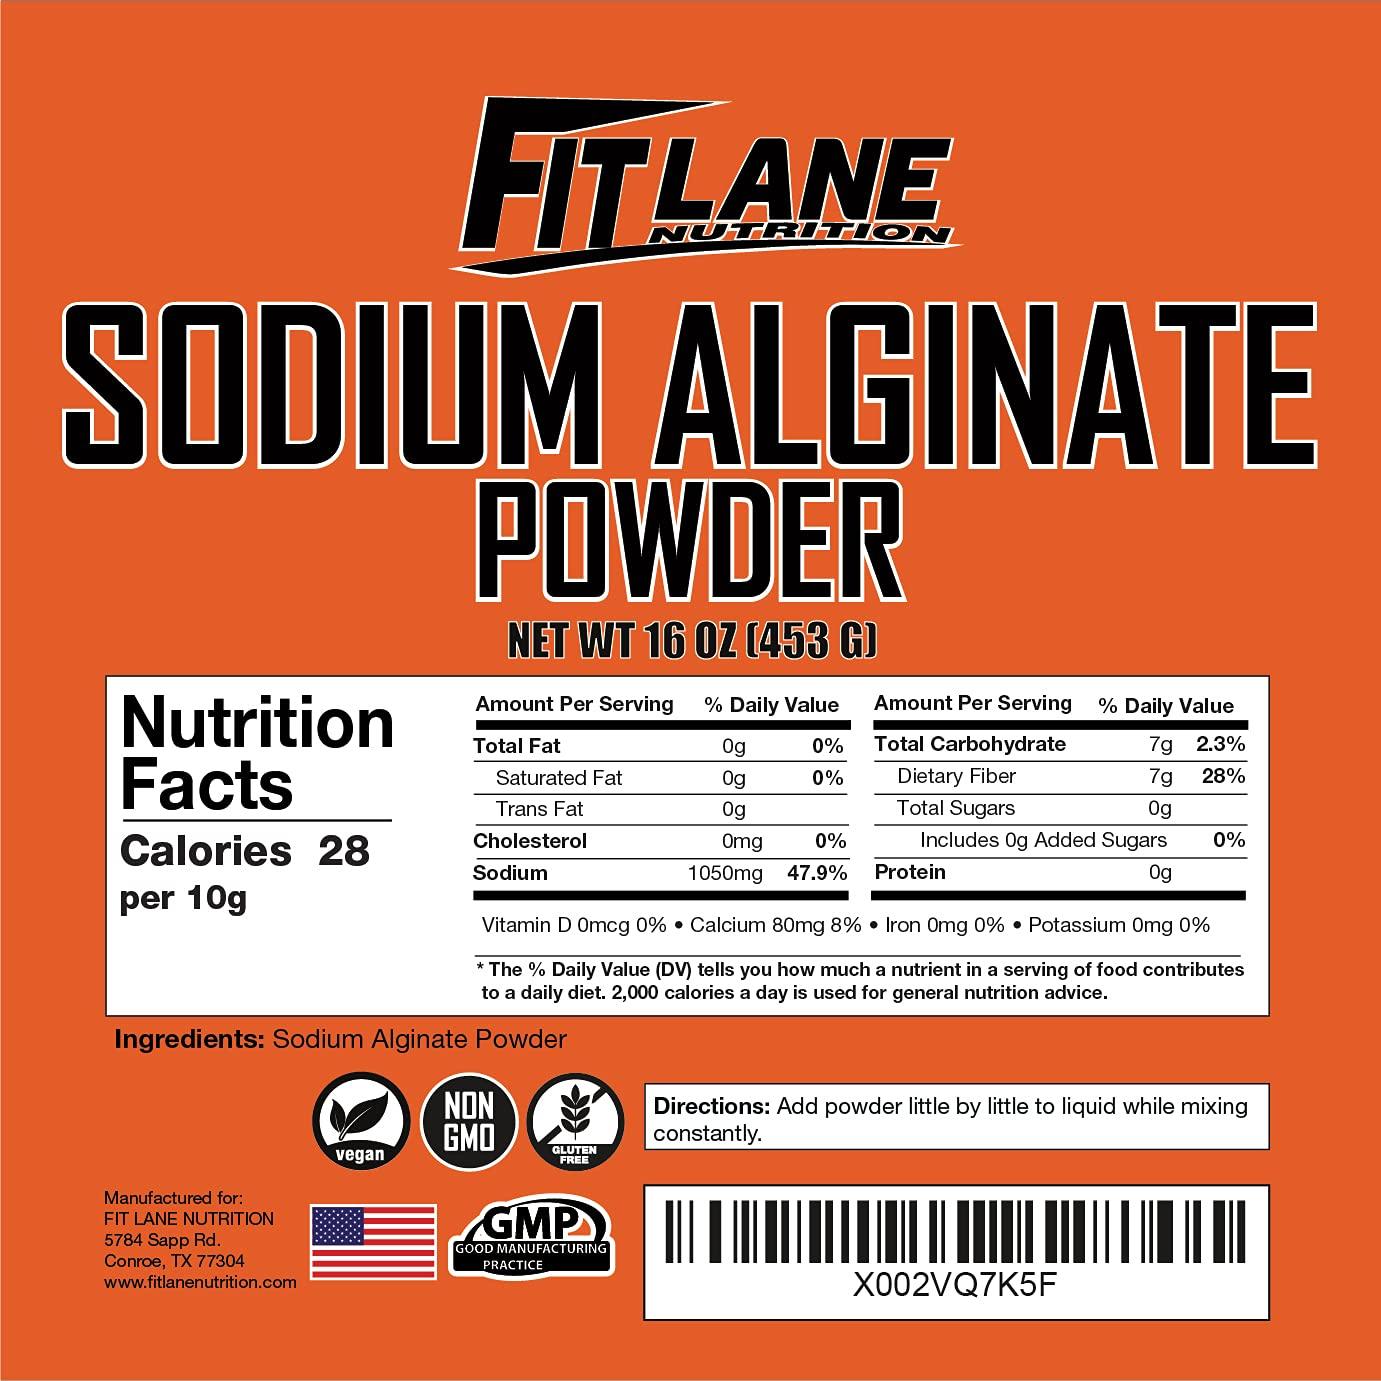 Sodium Alginate Powder, Food Grade Bulk Powder for Thickening, Non